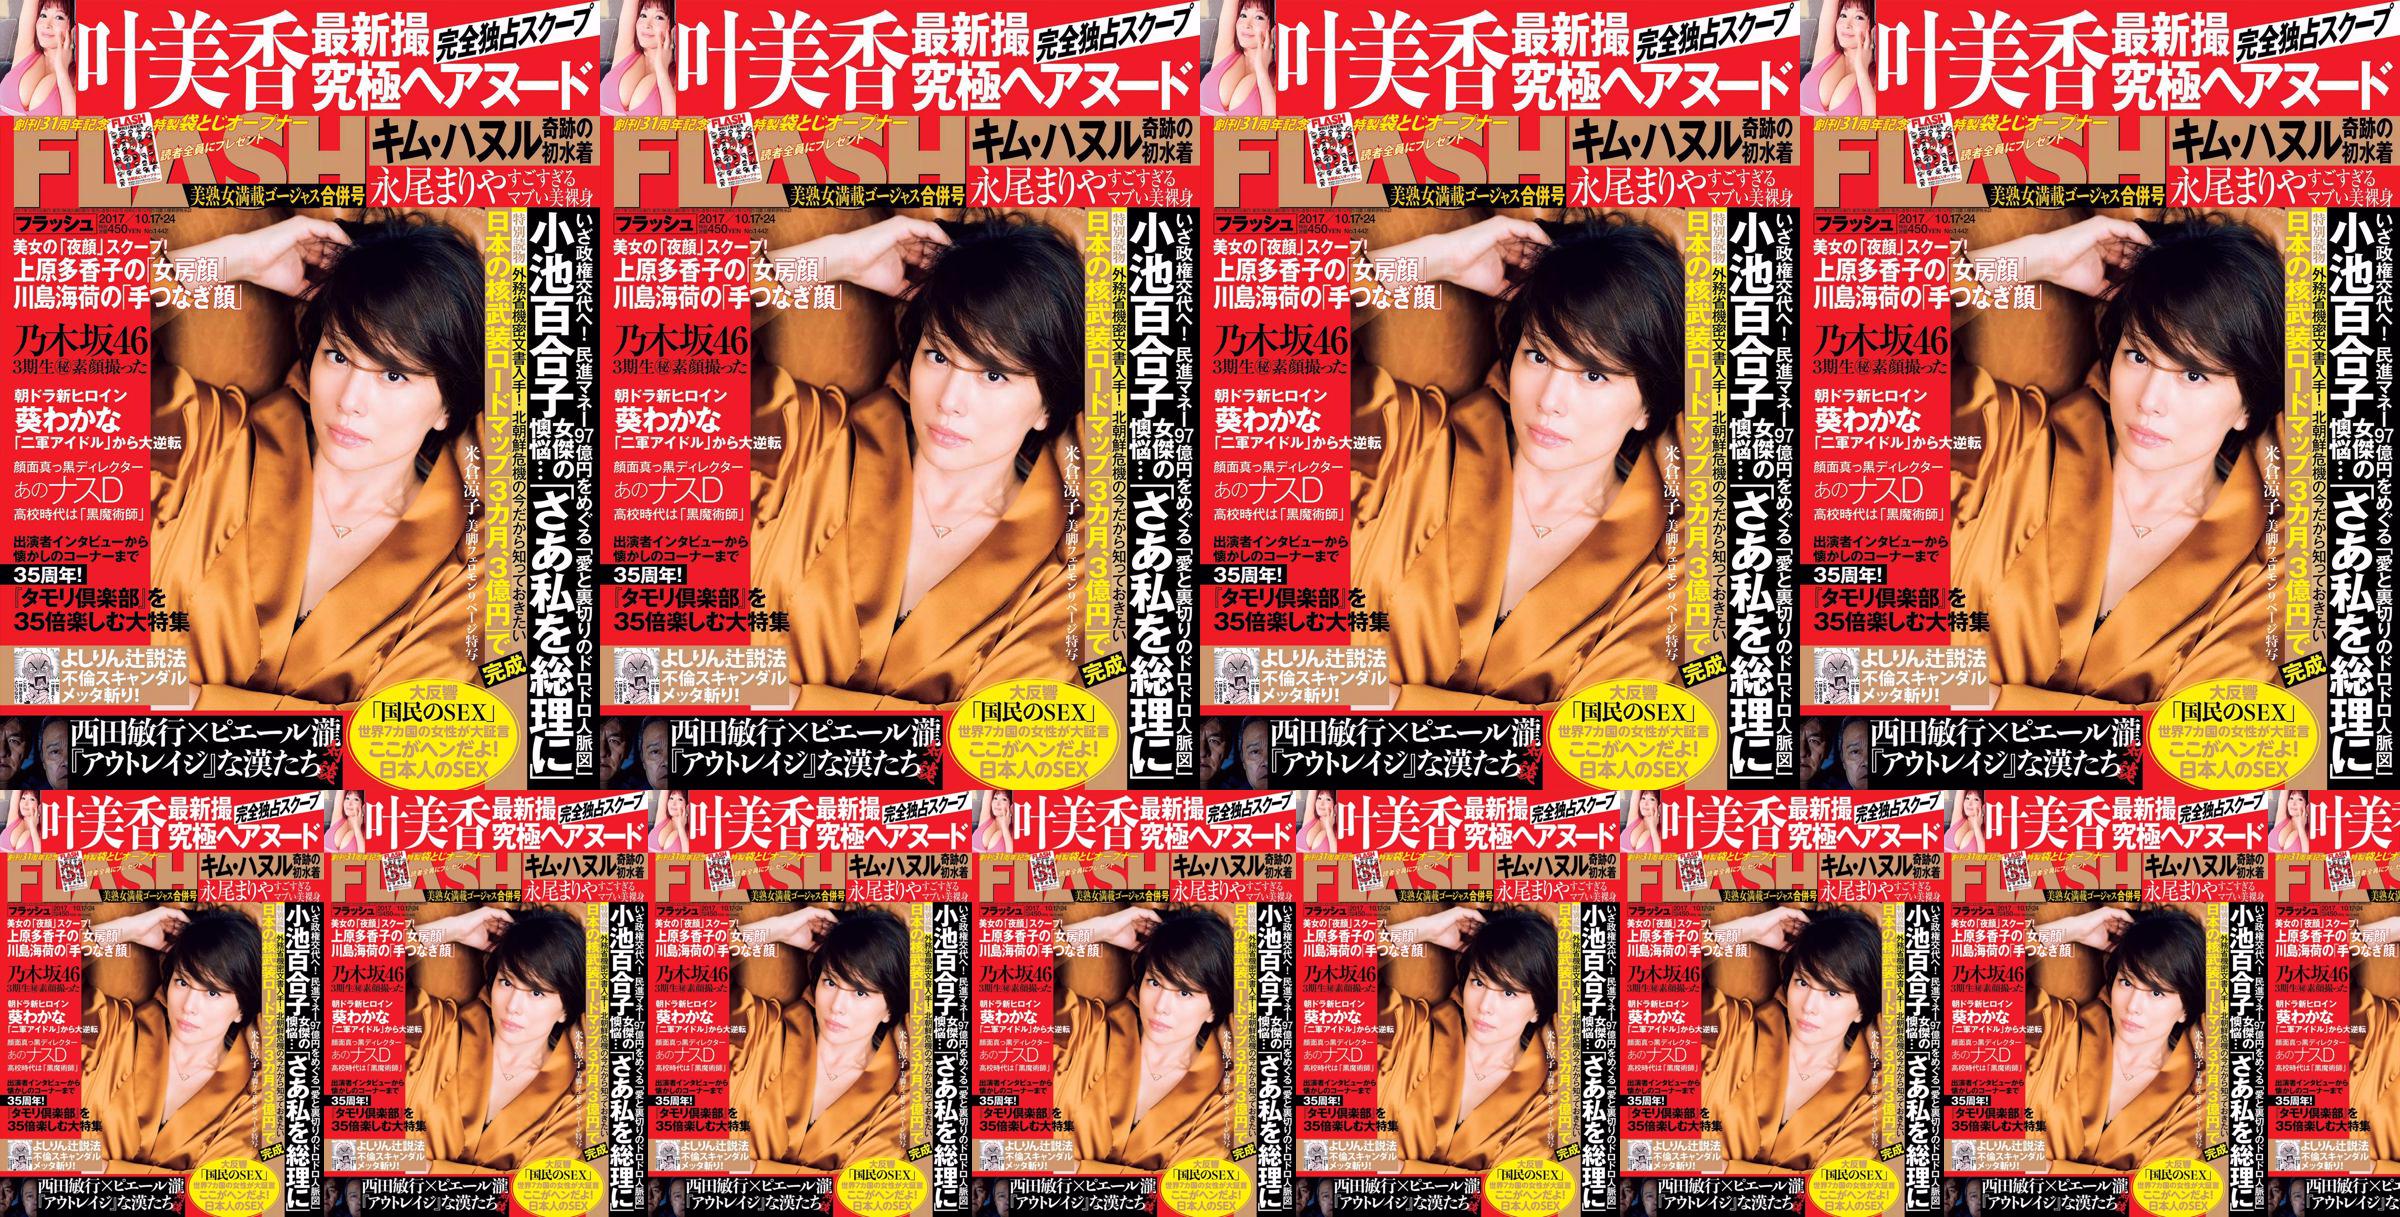 [FLASH] Yonekura Ryoko Ye Meixiang Tachibana Flower Rin Nagao Rika 2017.10.17-24 Photo Magazine No.8b9c79 Page 1